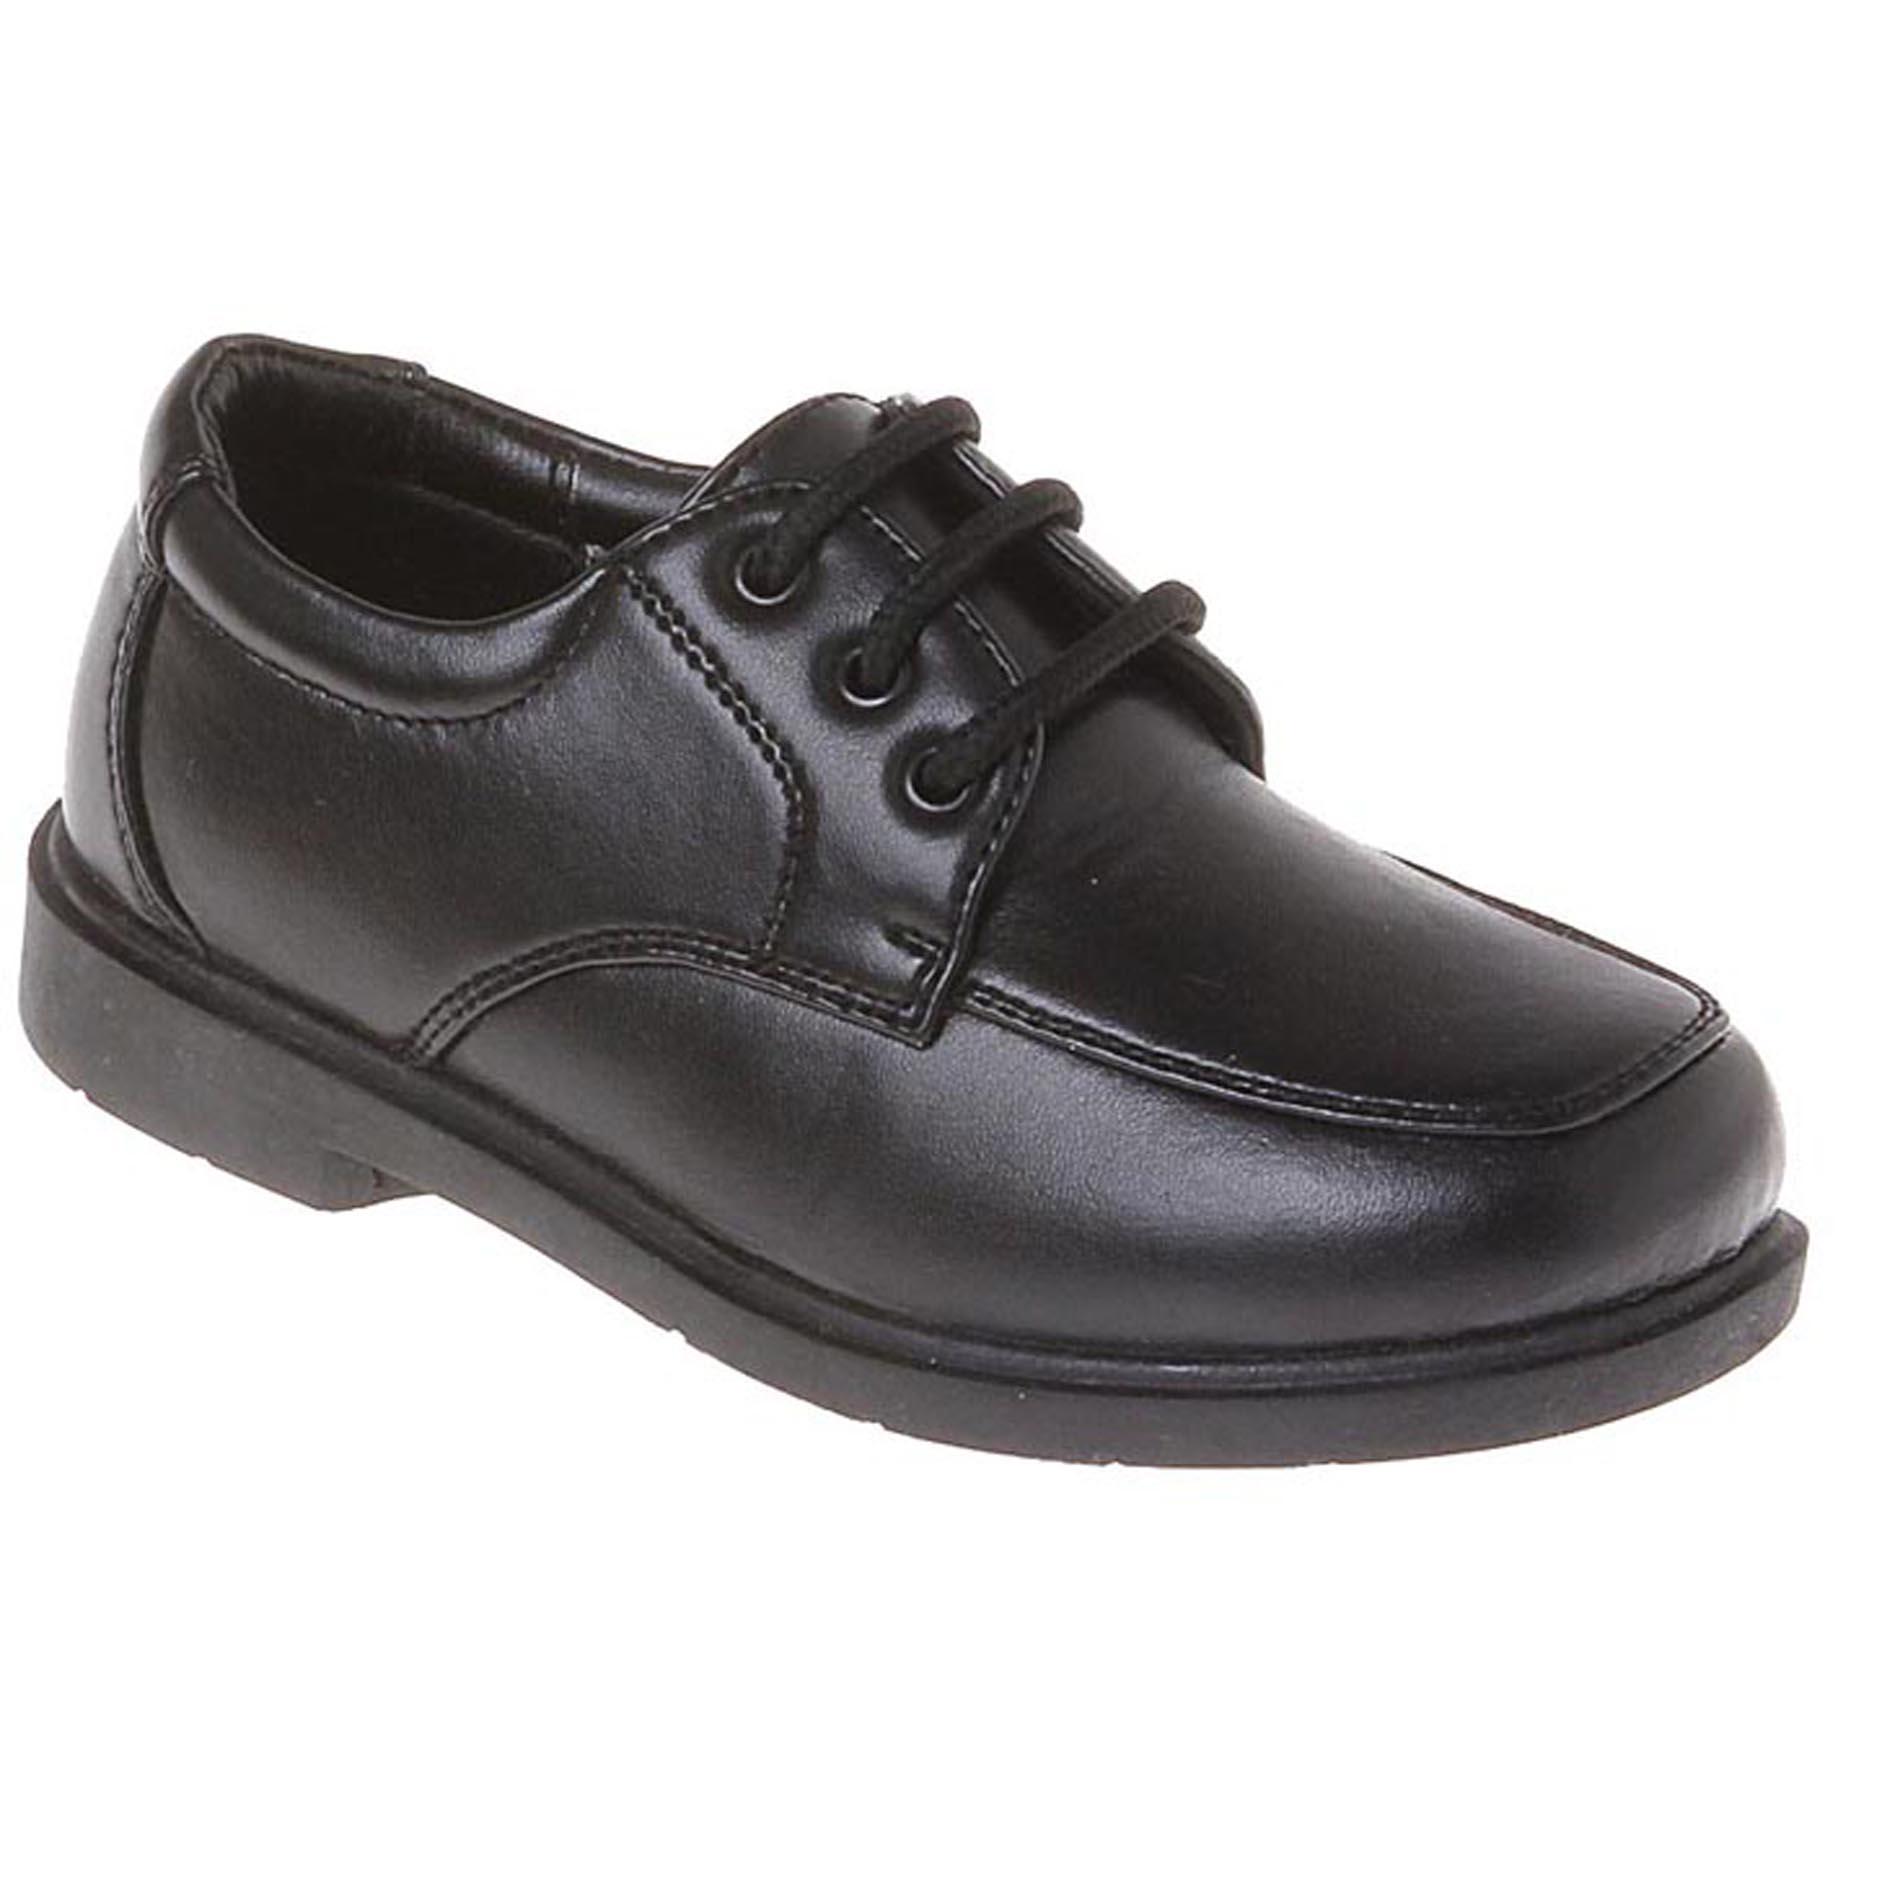 Josmo Toddler Boys' Black Oxford Shoe